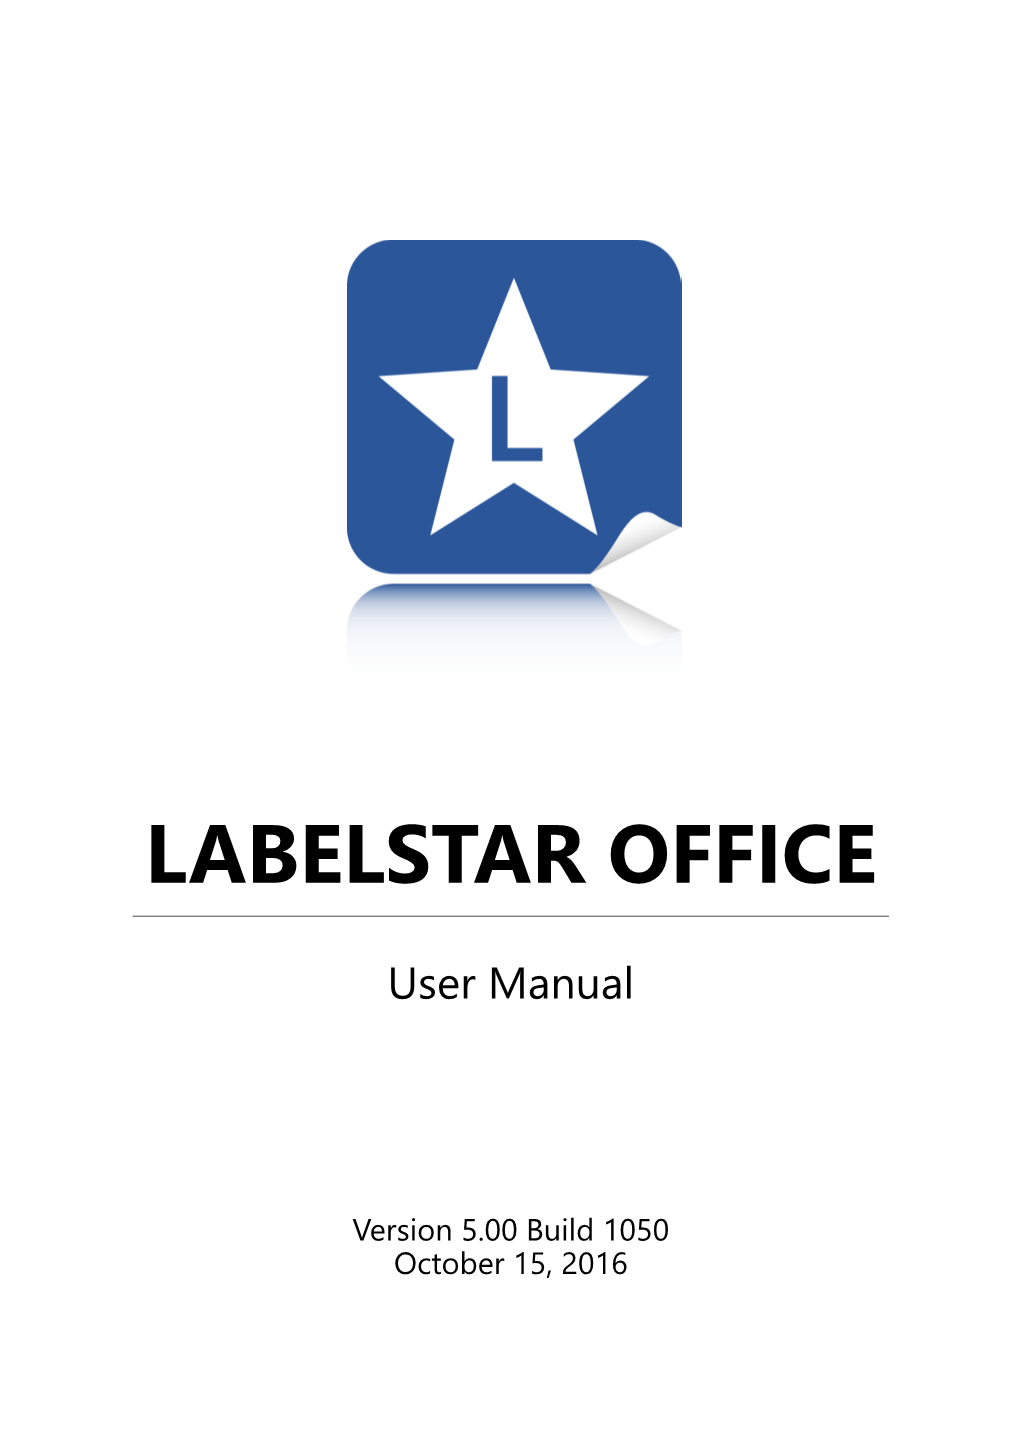 Labelstar Office